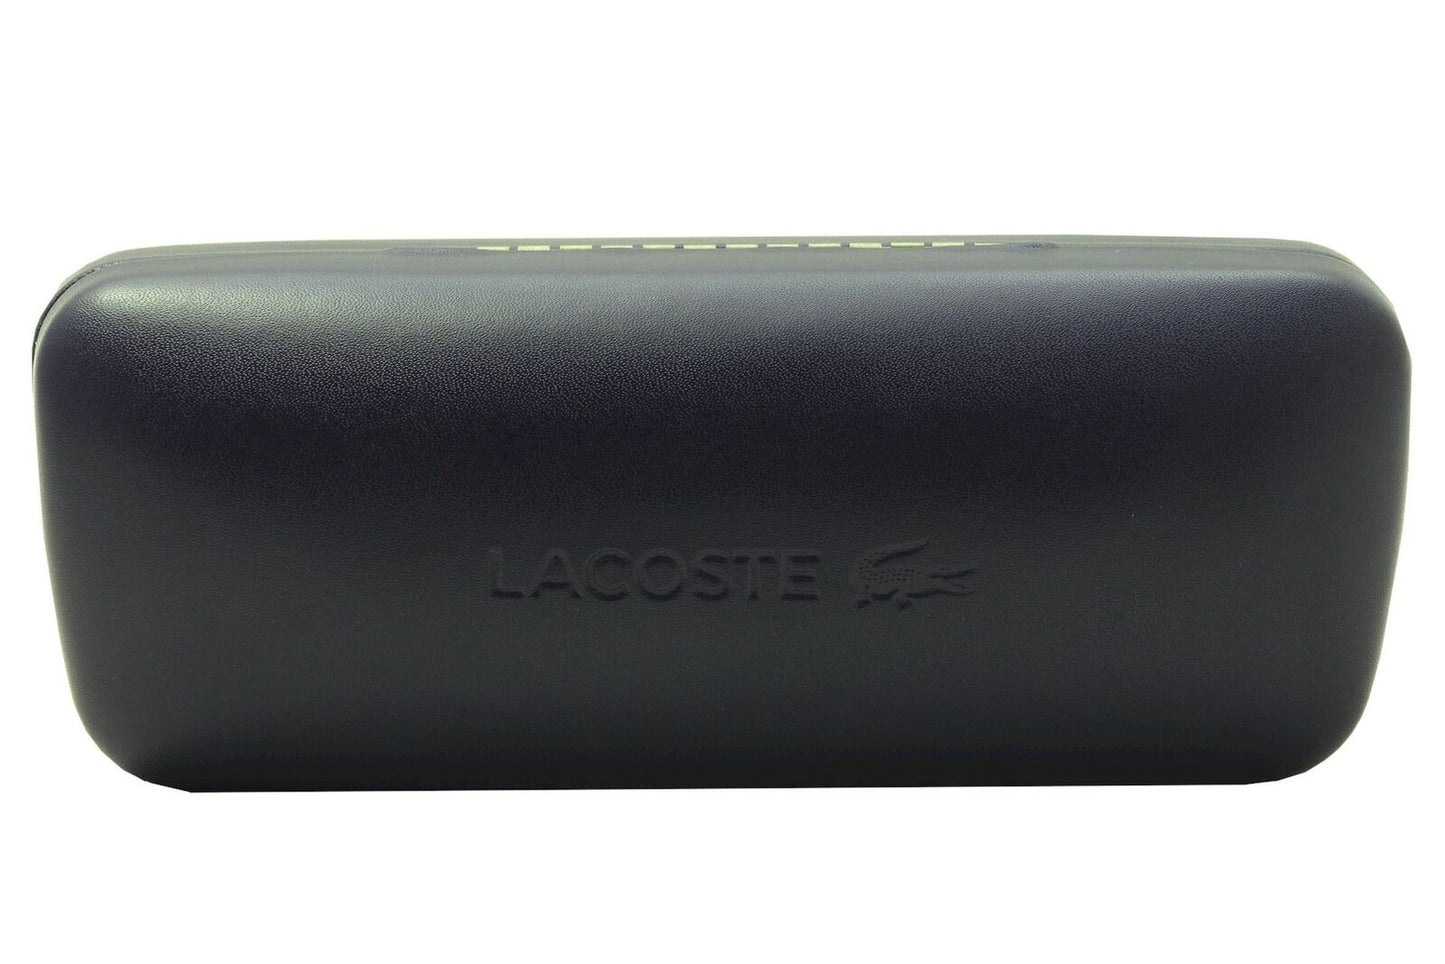 Lacoste L2908-240 55mm New Eyeglasses